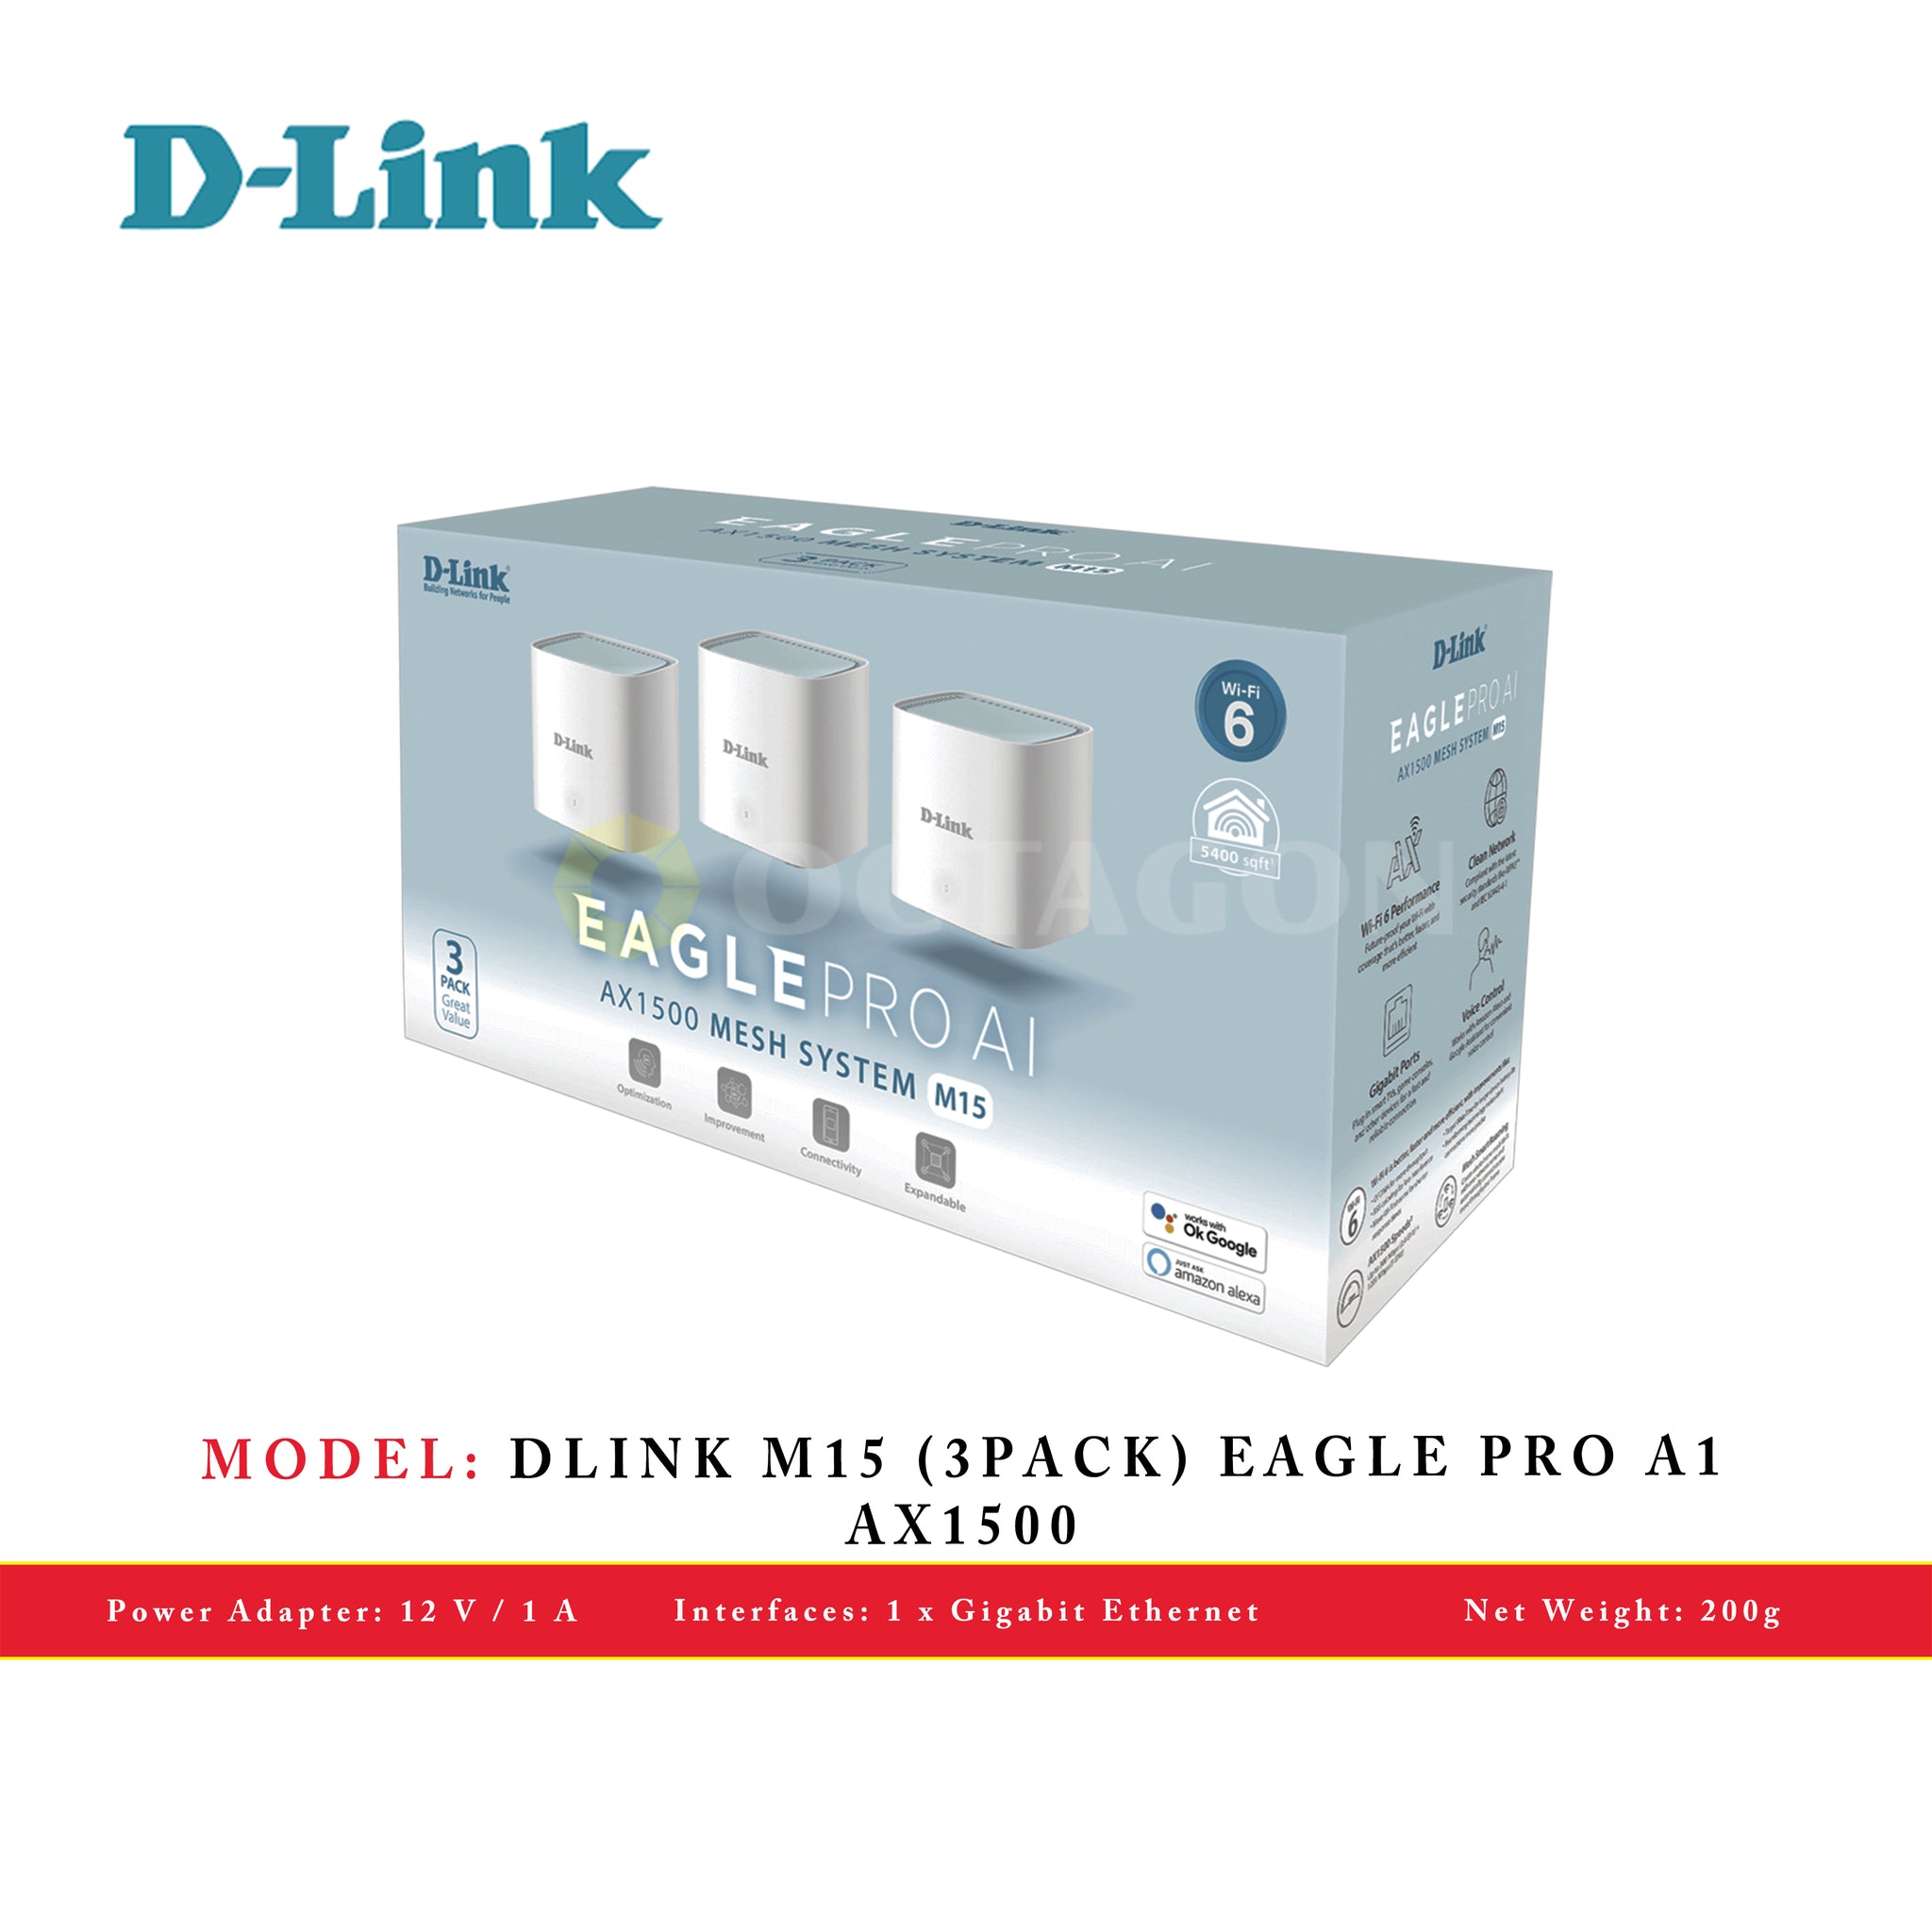 DLINK M15 (3PACK) EAGLE PRO A1 AX1500